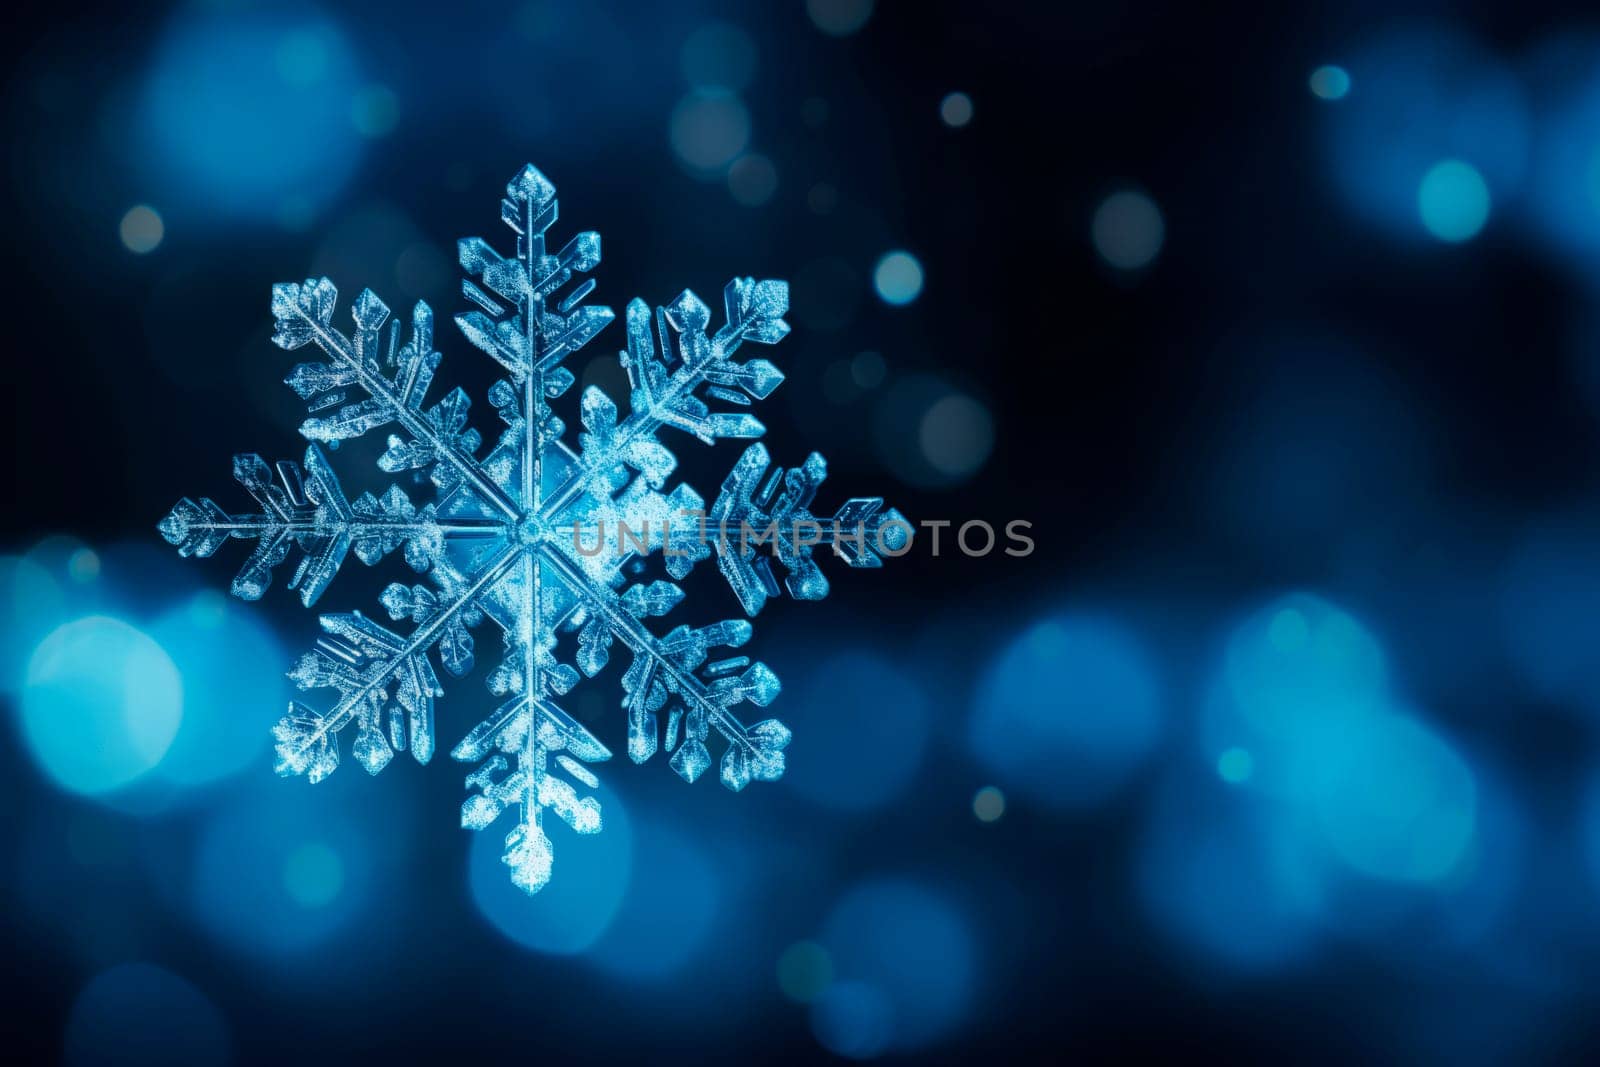 Snowflake close-up, background in blur by Spirina